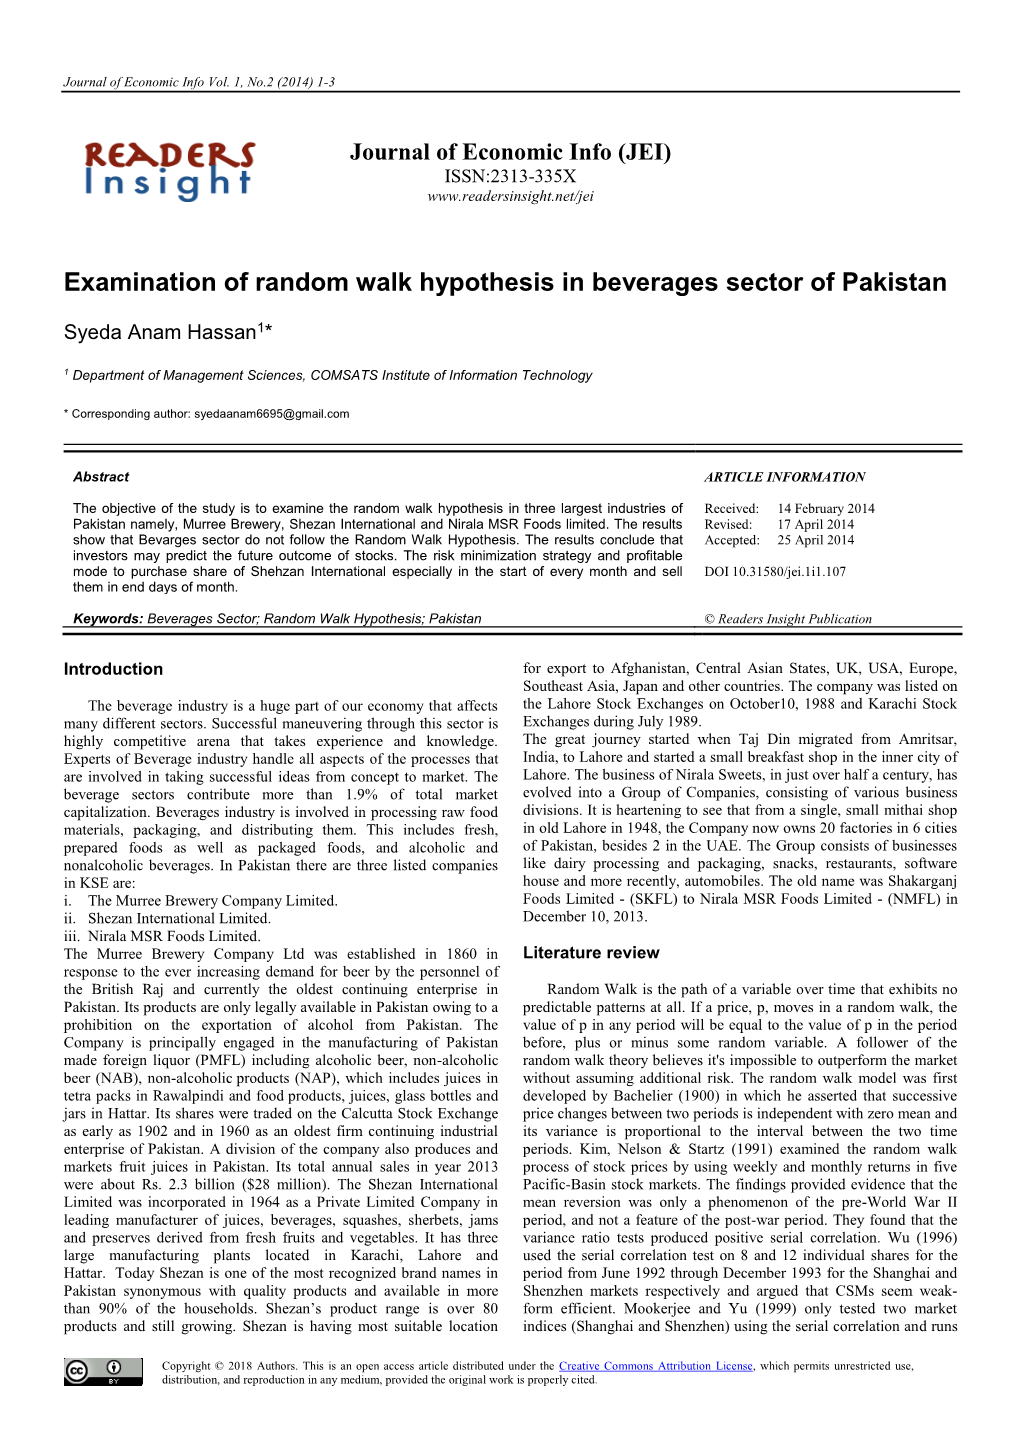 Examination of Random Walk Hypothesis in Beverages Sector of Pakistan